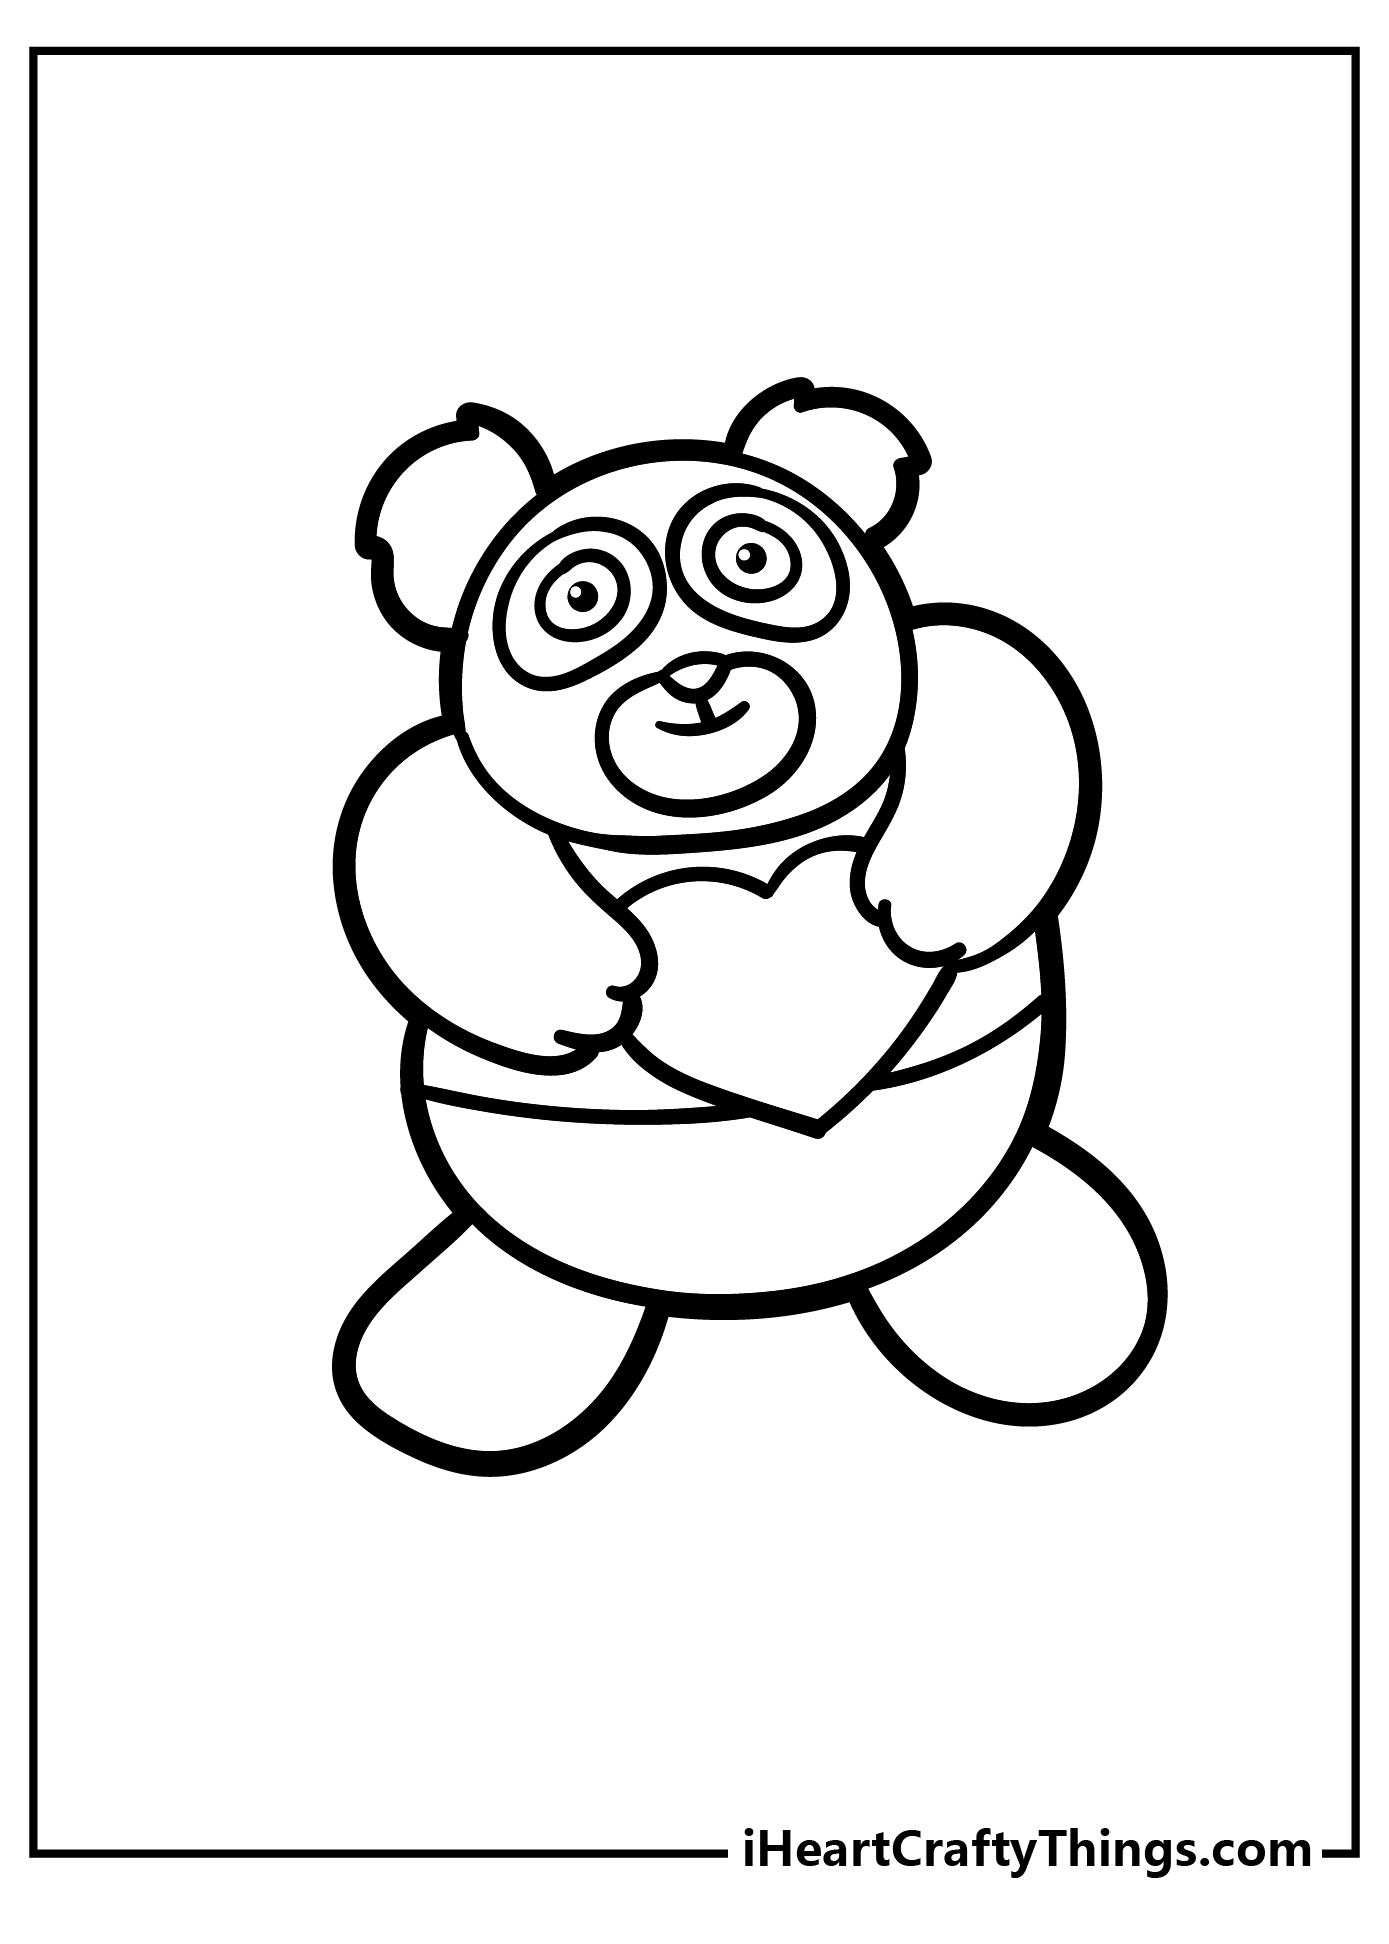 Panda Coloring Sheet for children free download